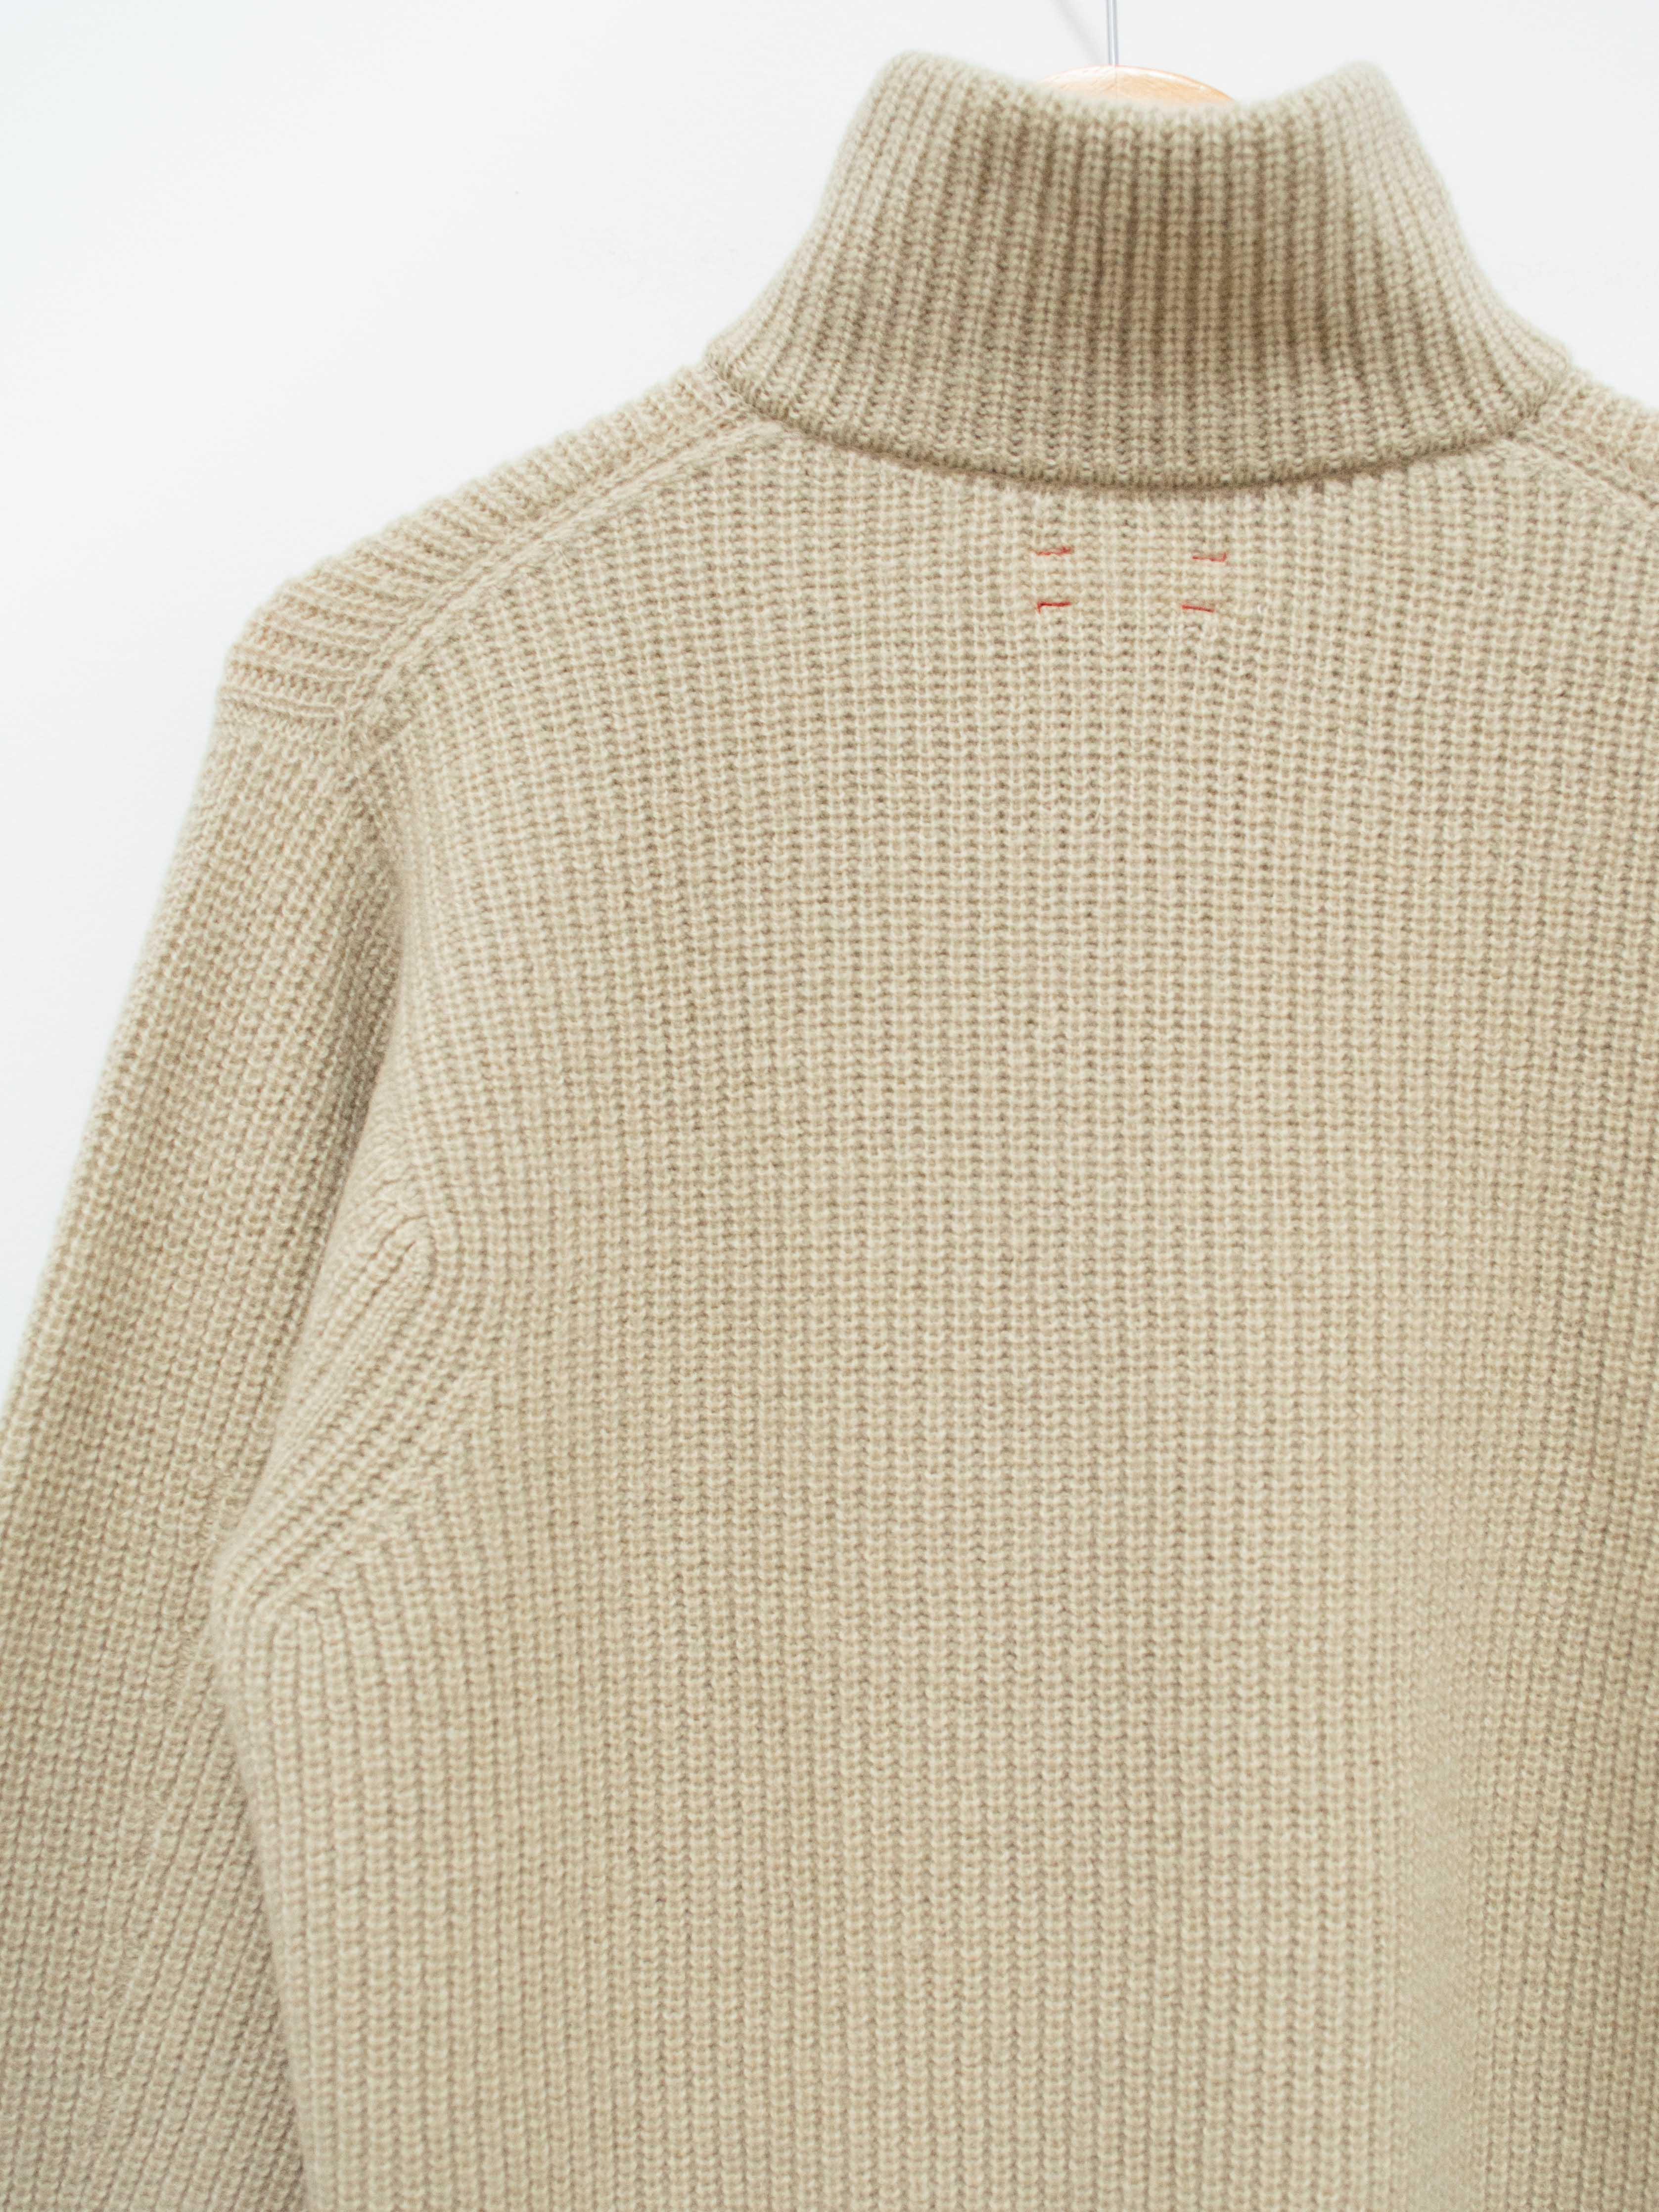 Namu Shop - Unfil Wool Cashmere Half Zip Sweater - Grass Beige